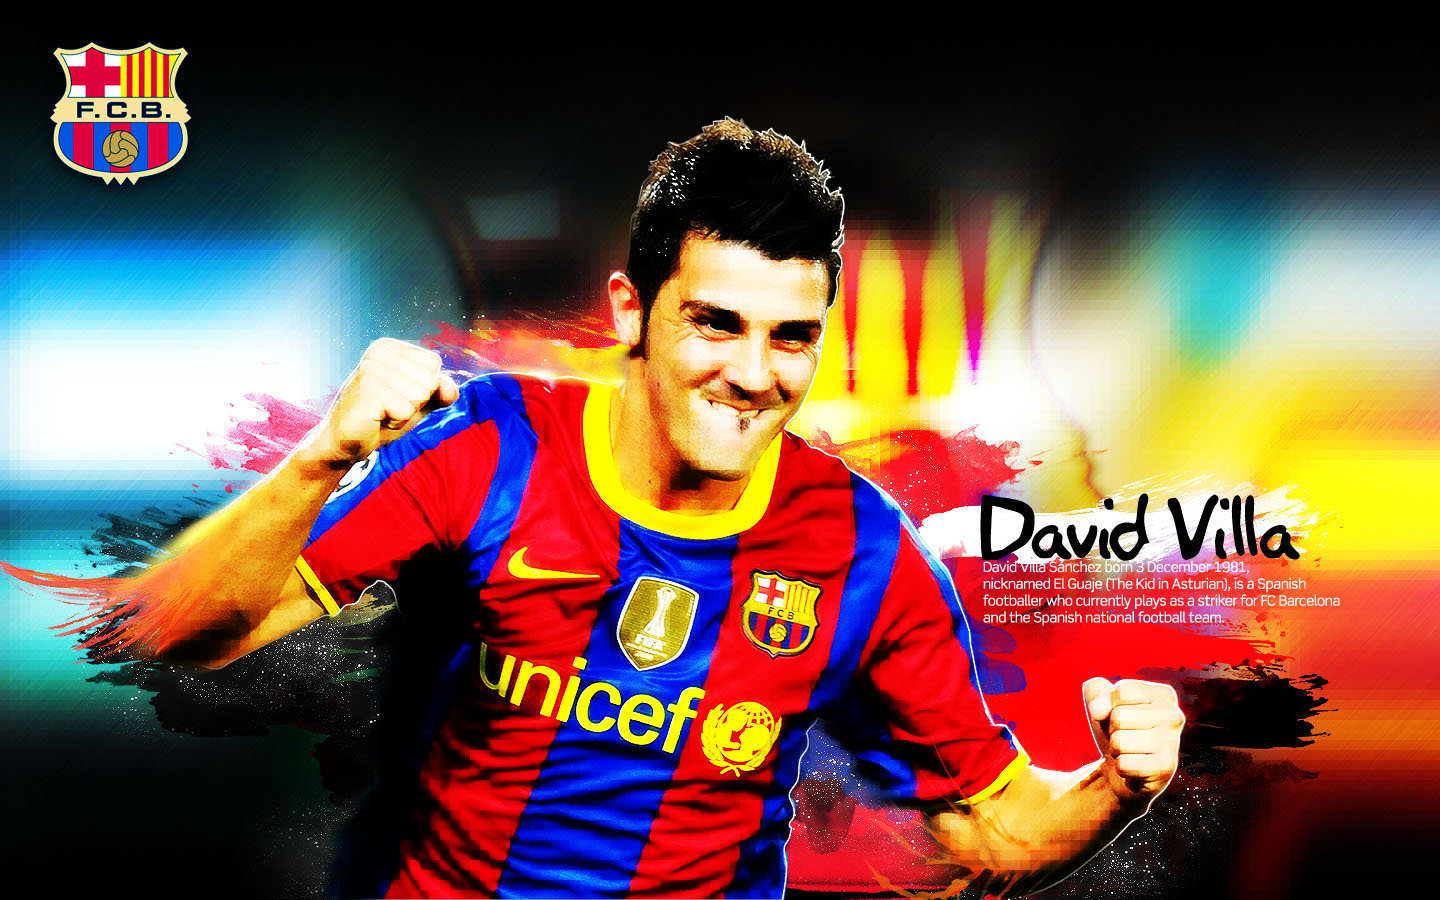 David Villa Fc Barcelona Wallpaper